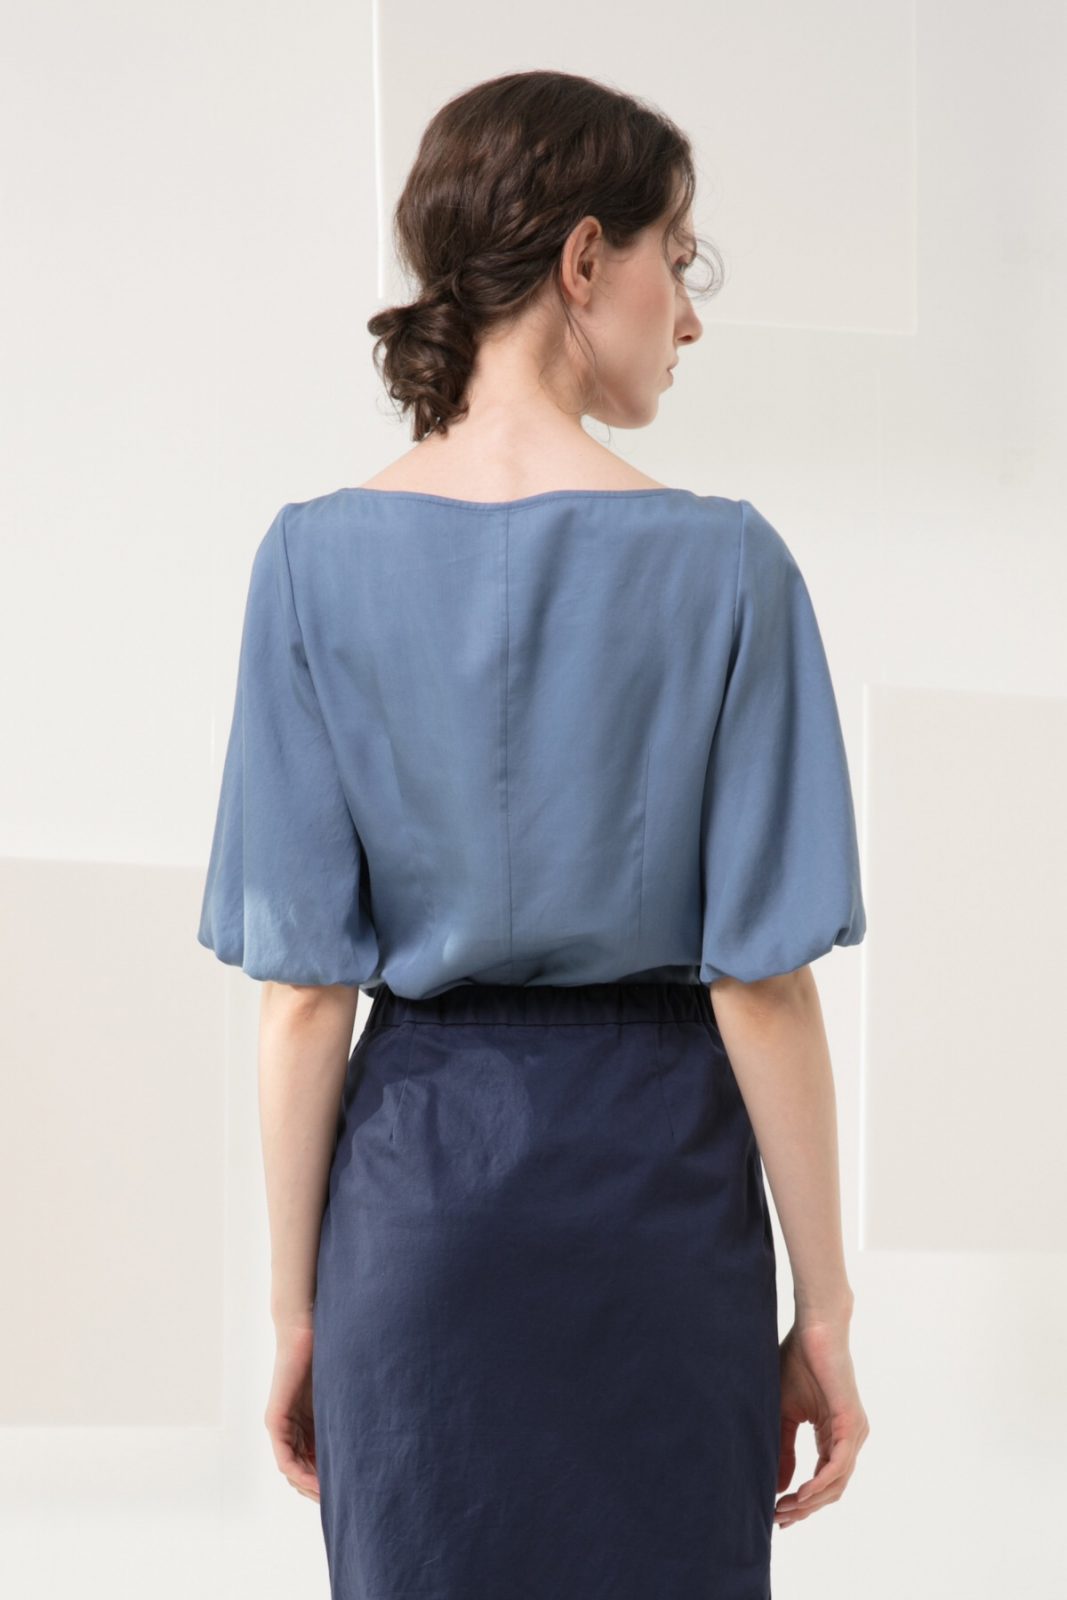 SKYE minimalist women clothing fashion Kai Knot Top blue 3